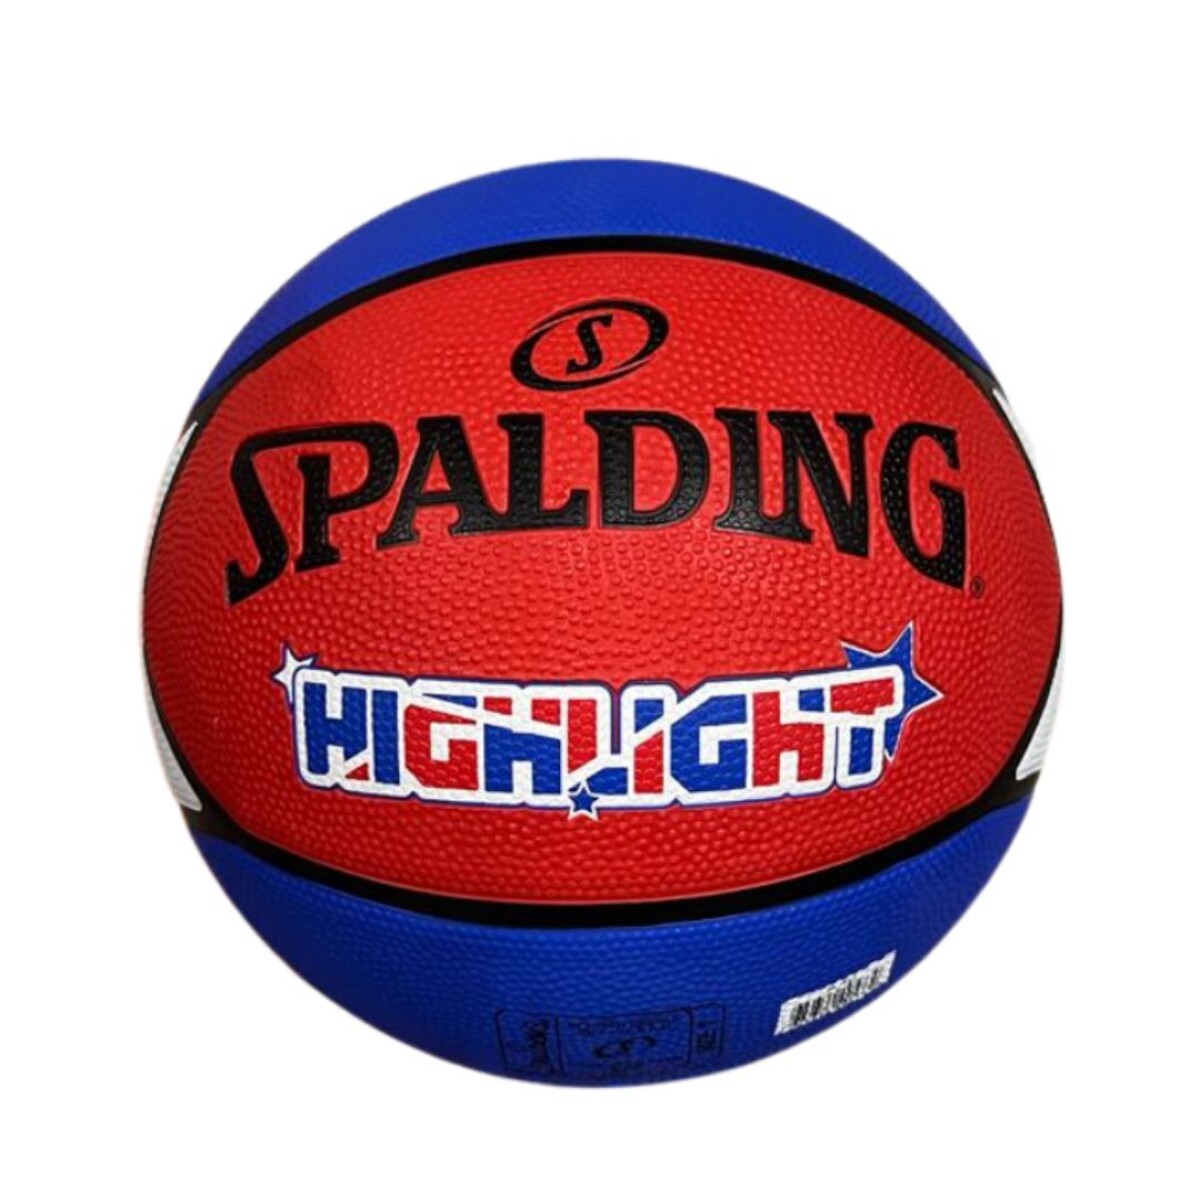 Pelota Basket Spalding Profesional - Highlight Rojo, Azul y Blanco Nº 7 